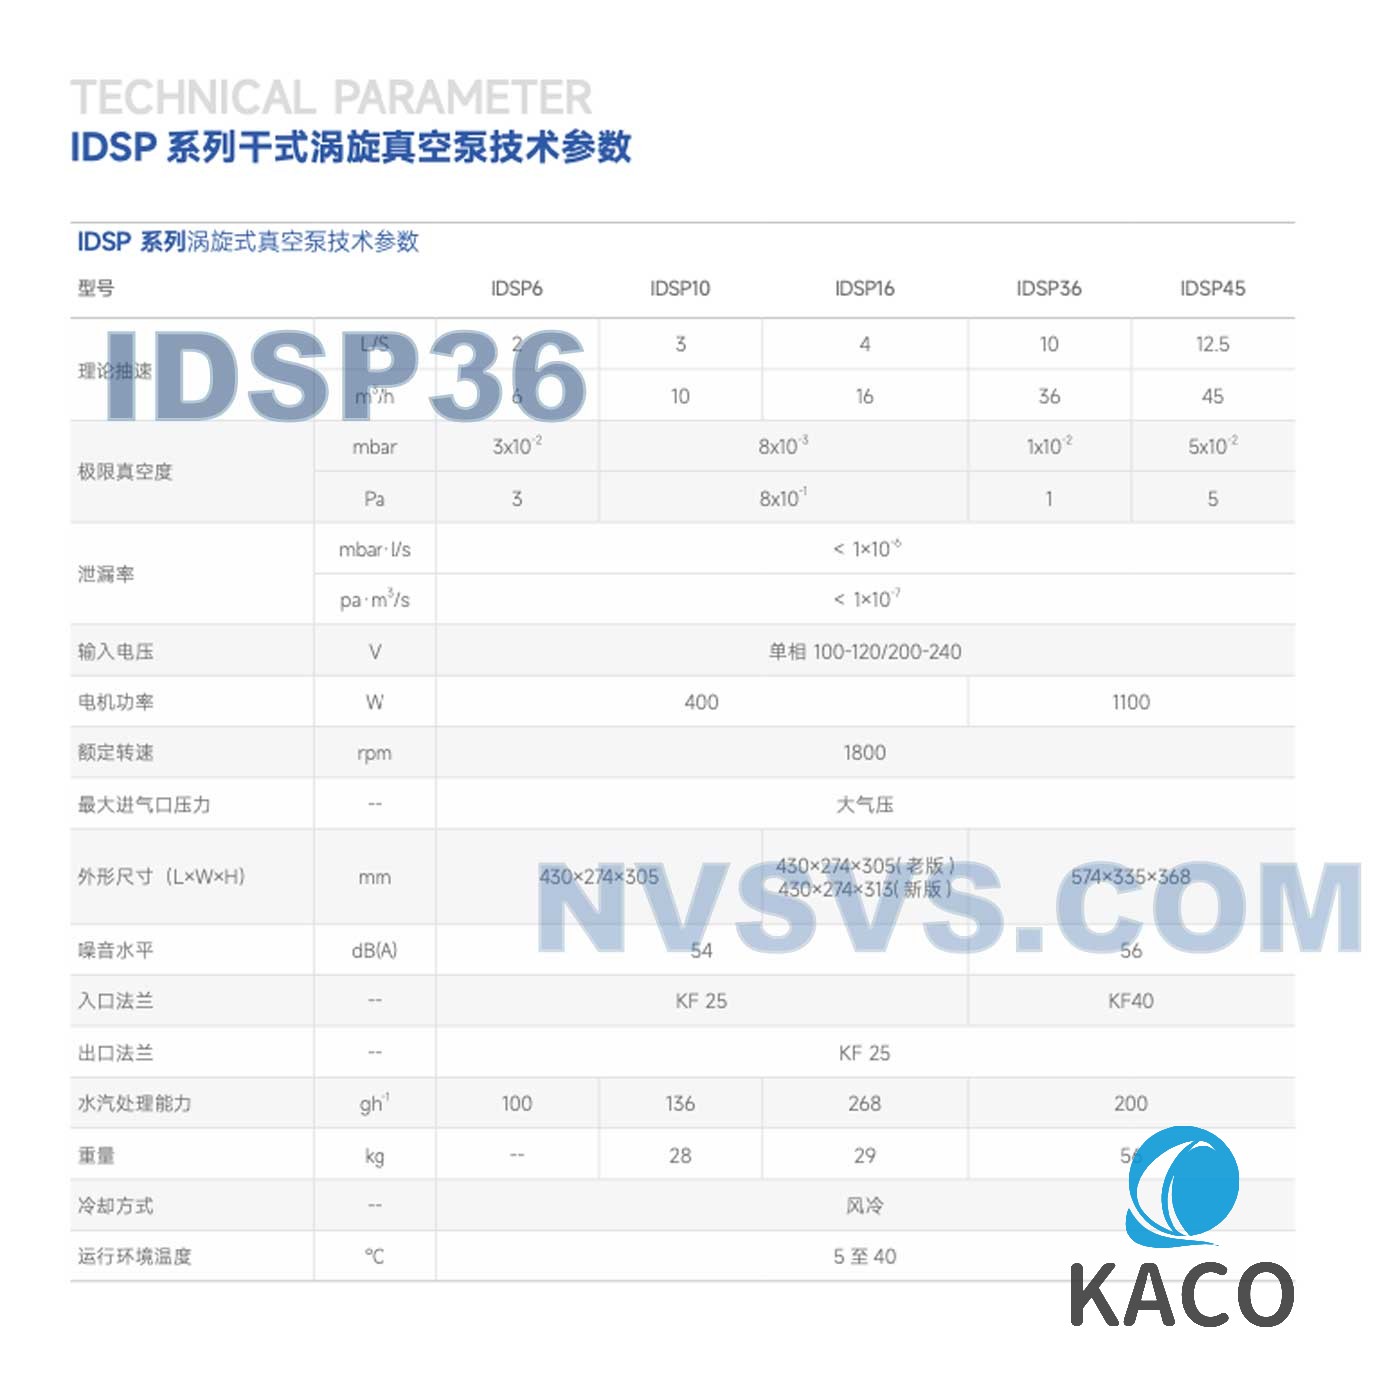 IDSP36-NVSVS-2.jpg